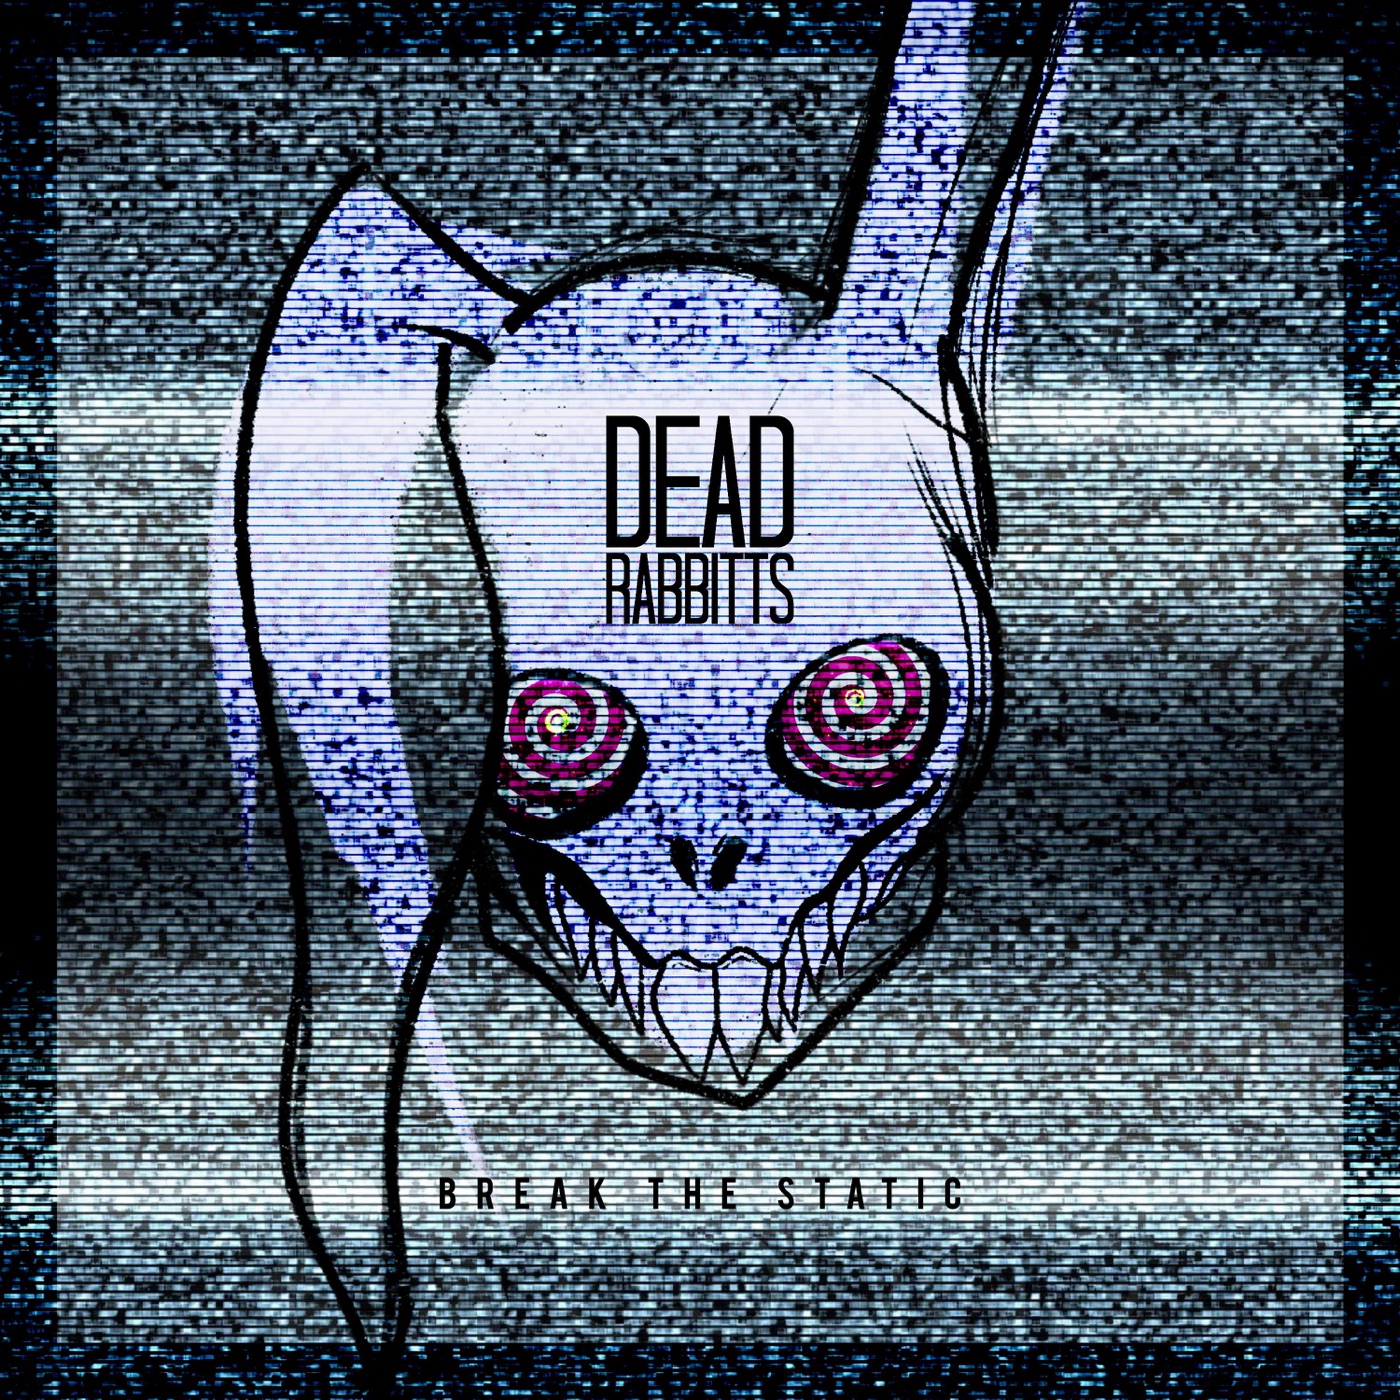 The Dead Rabbitts - Break The Static (2019)